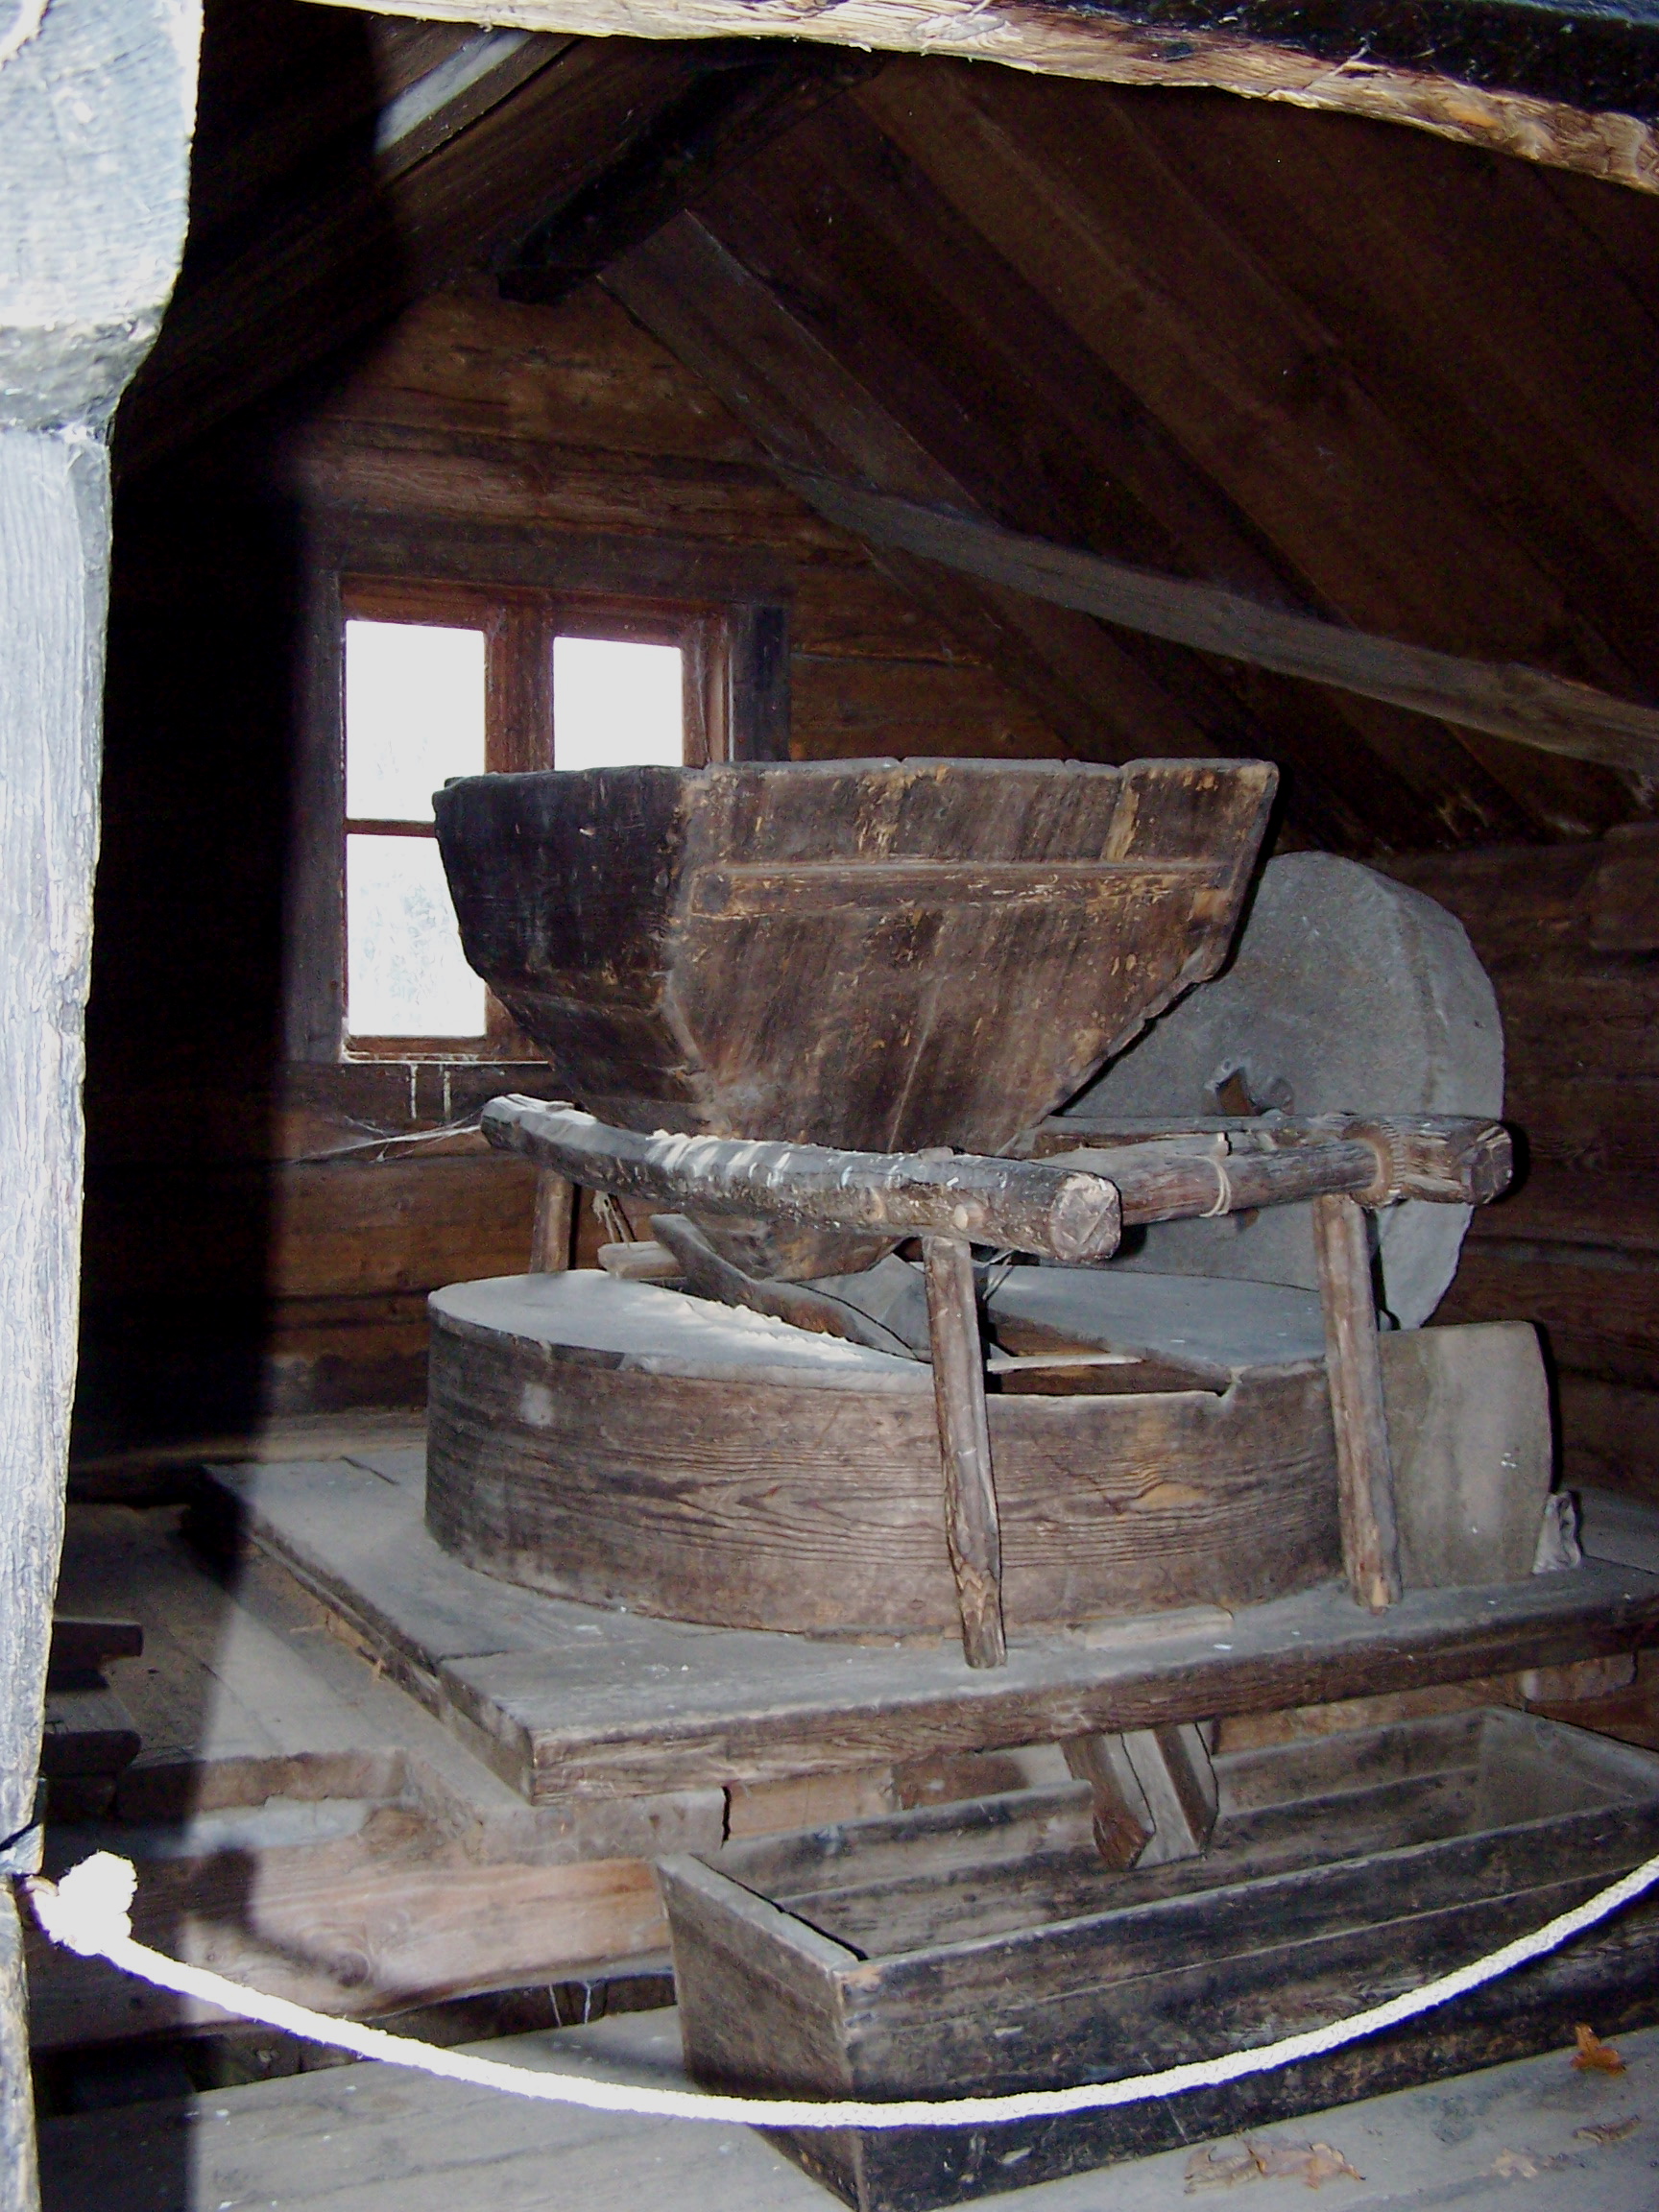 File:Splash mill inside.JPG - Wikimedia Commons